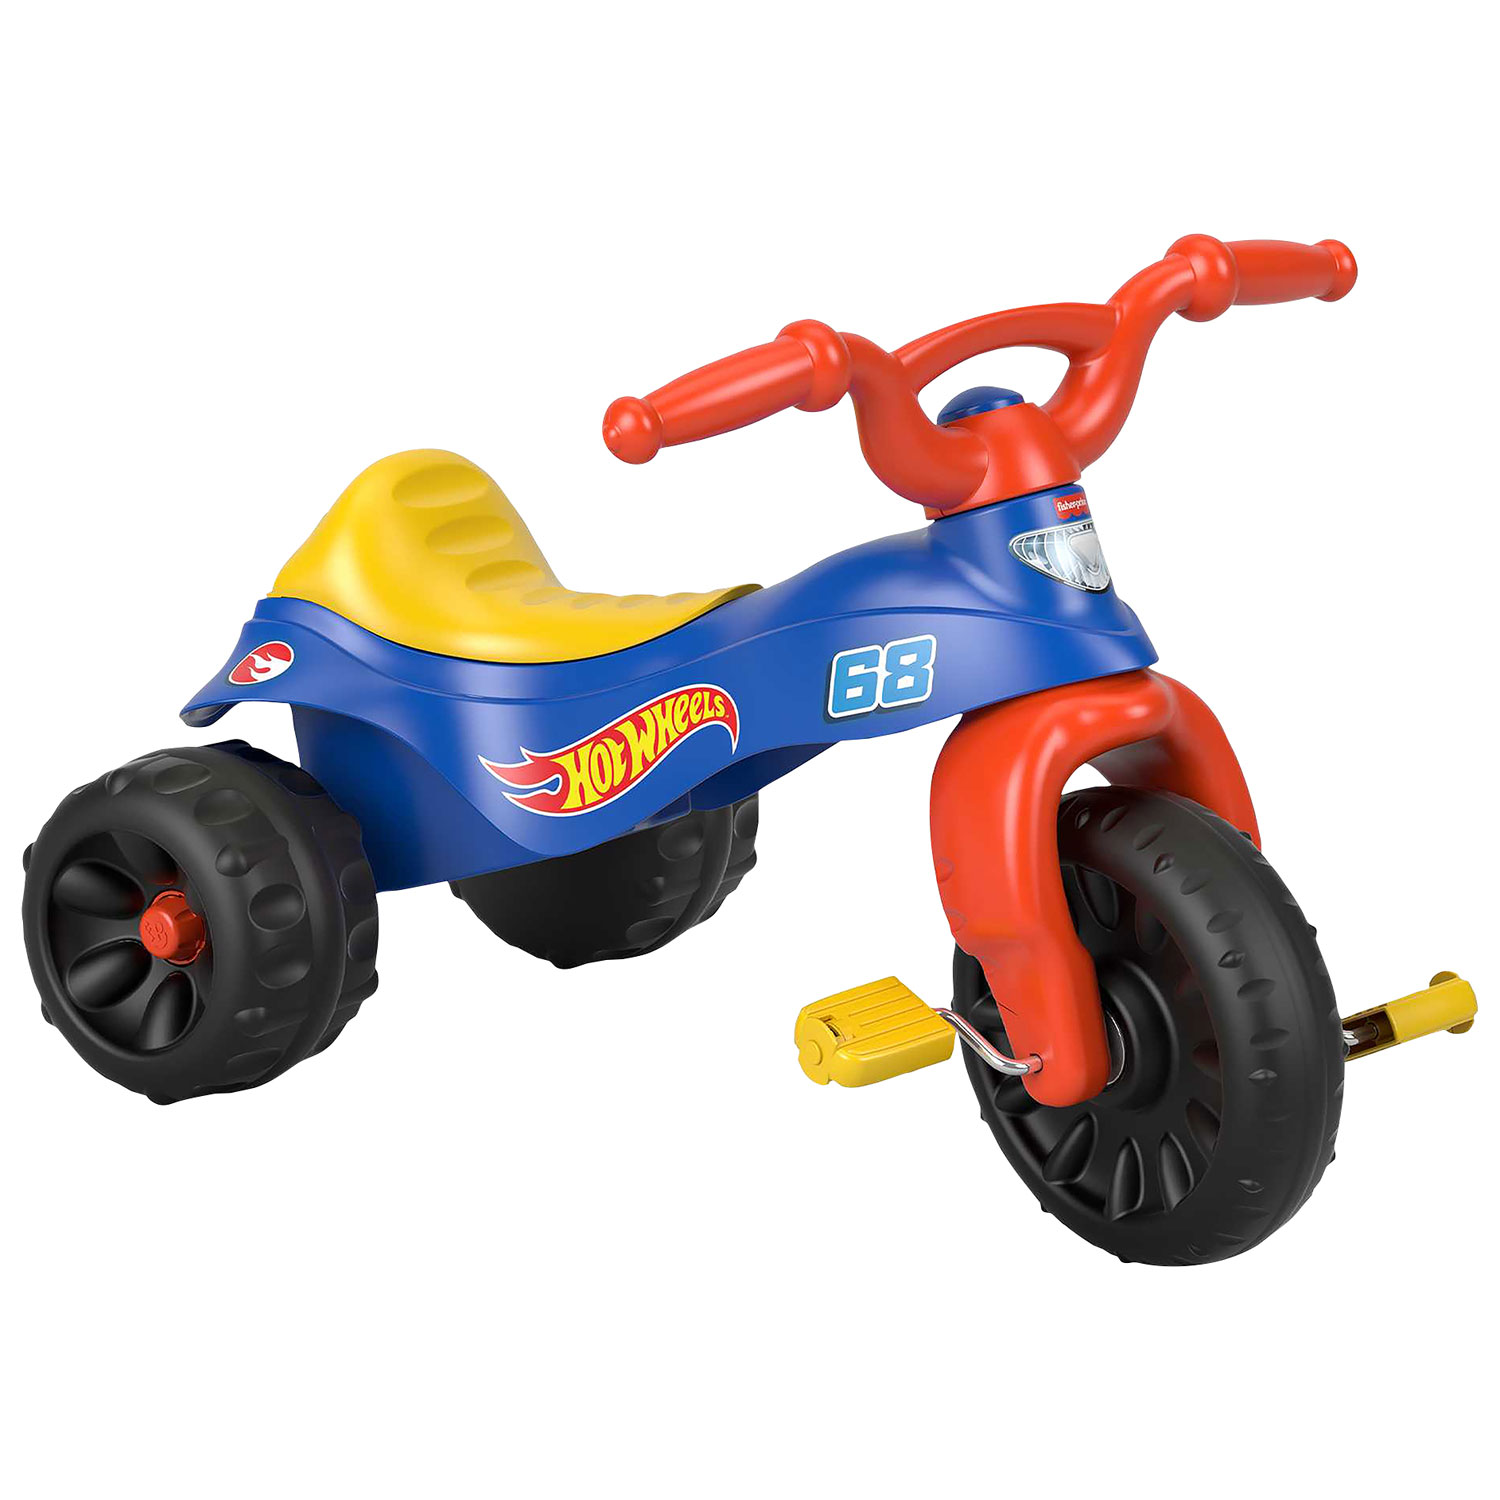 Fisher-Price Hot Wheels Tough Kids Trike - Blue/Red